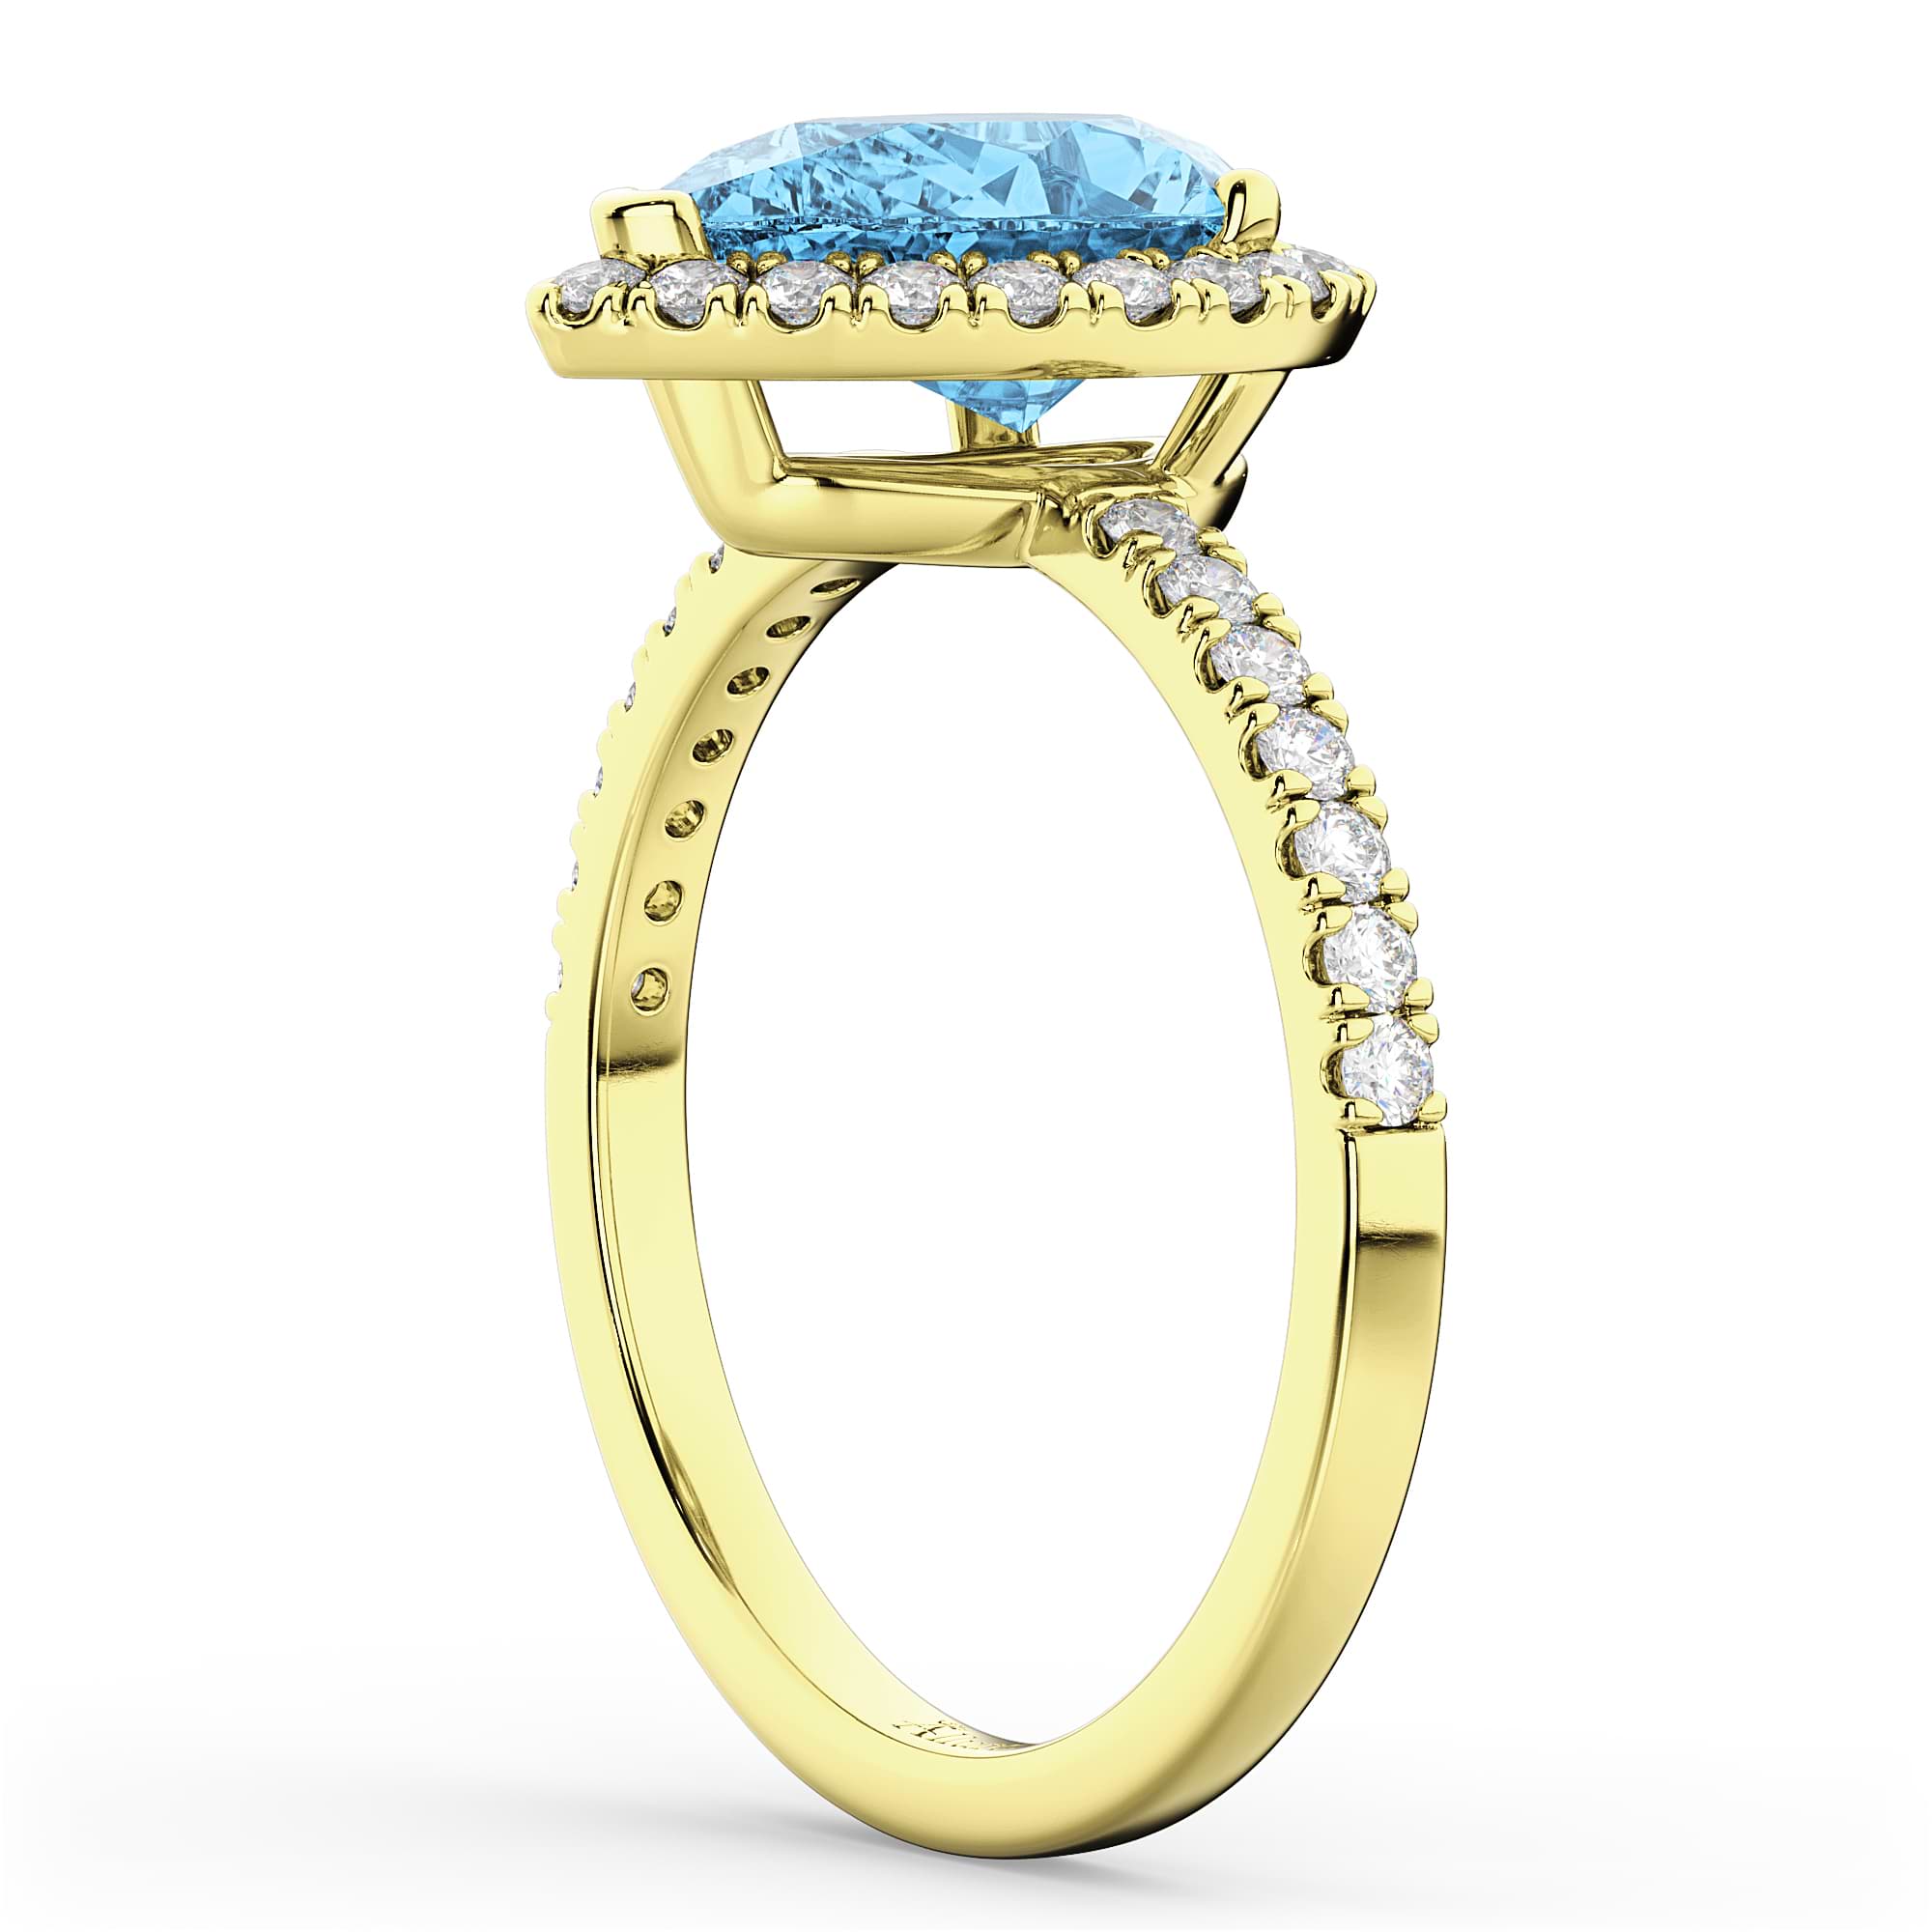 Pear Cut Halo Blue Topaz & Diamond Engagement Ring 14K Yellow Gold 1.91ct